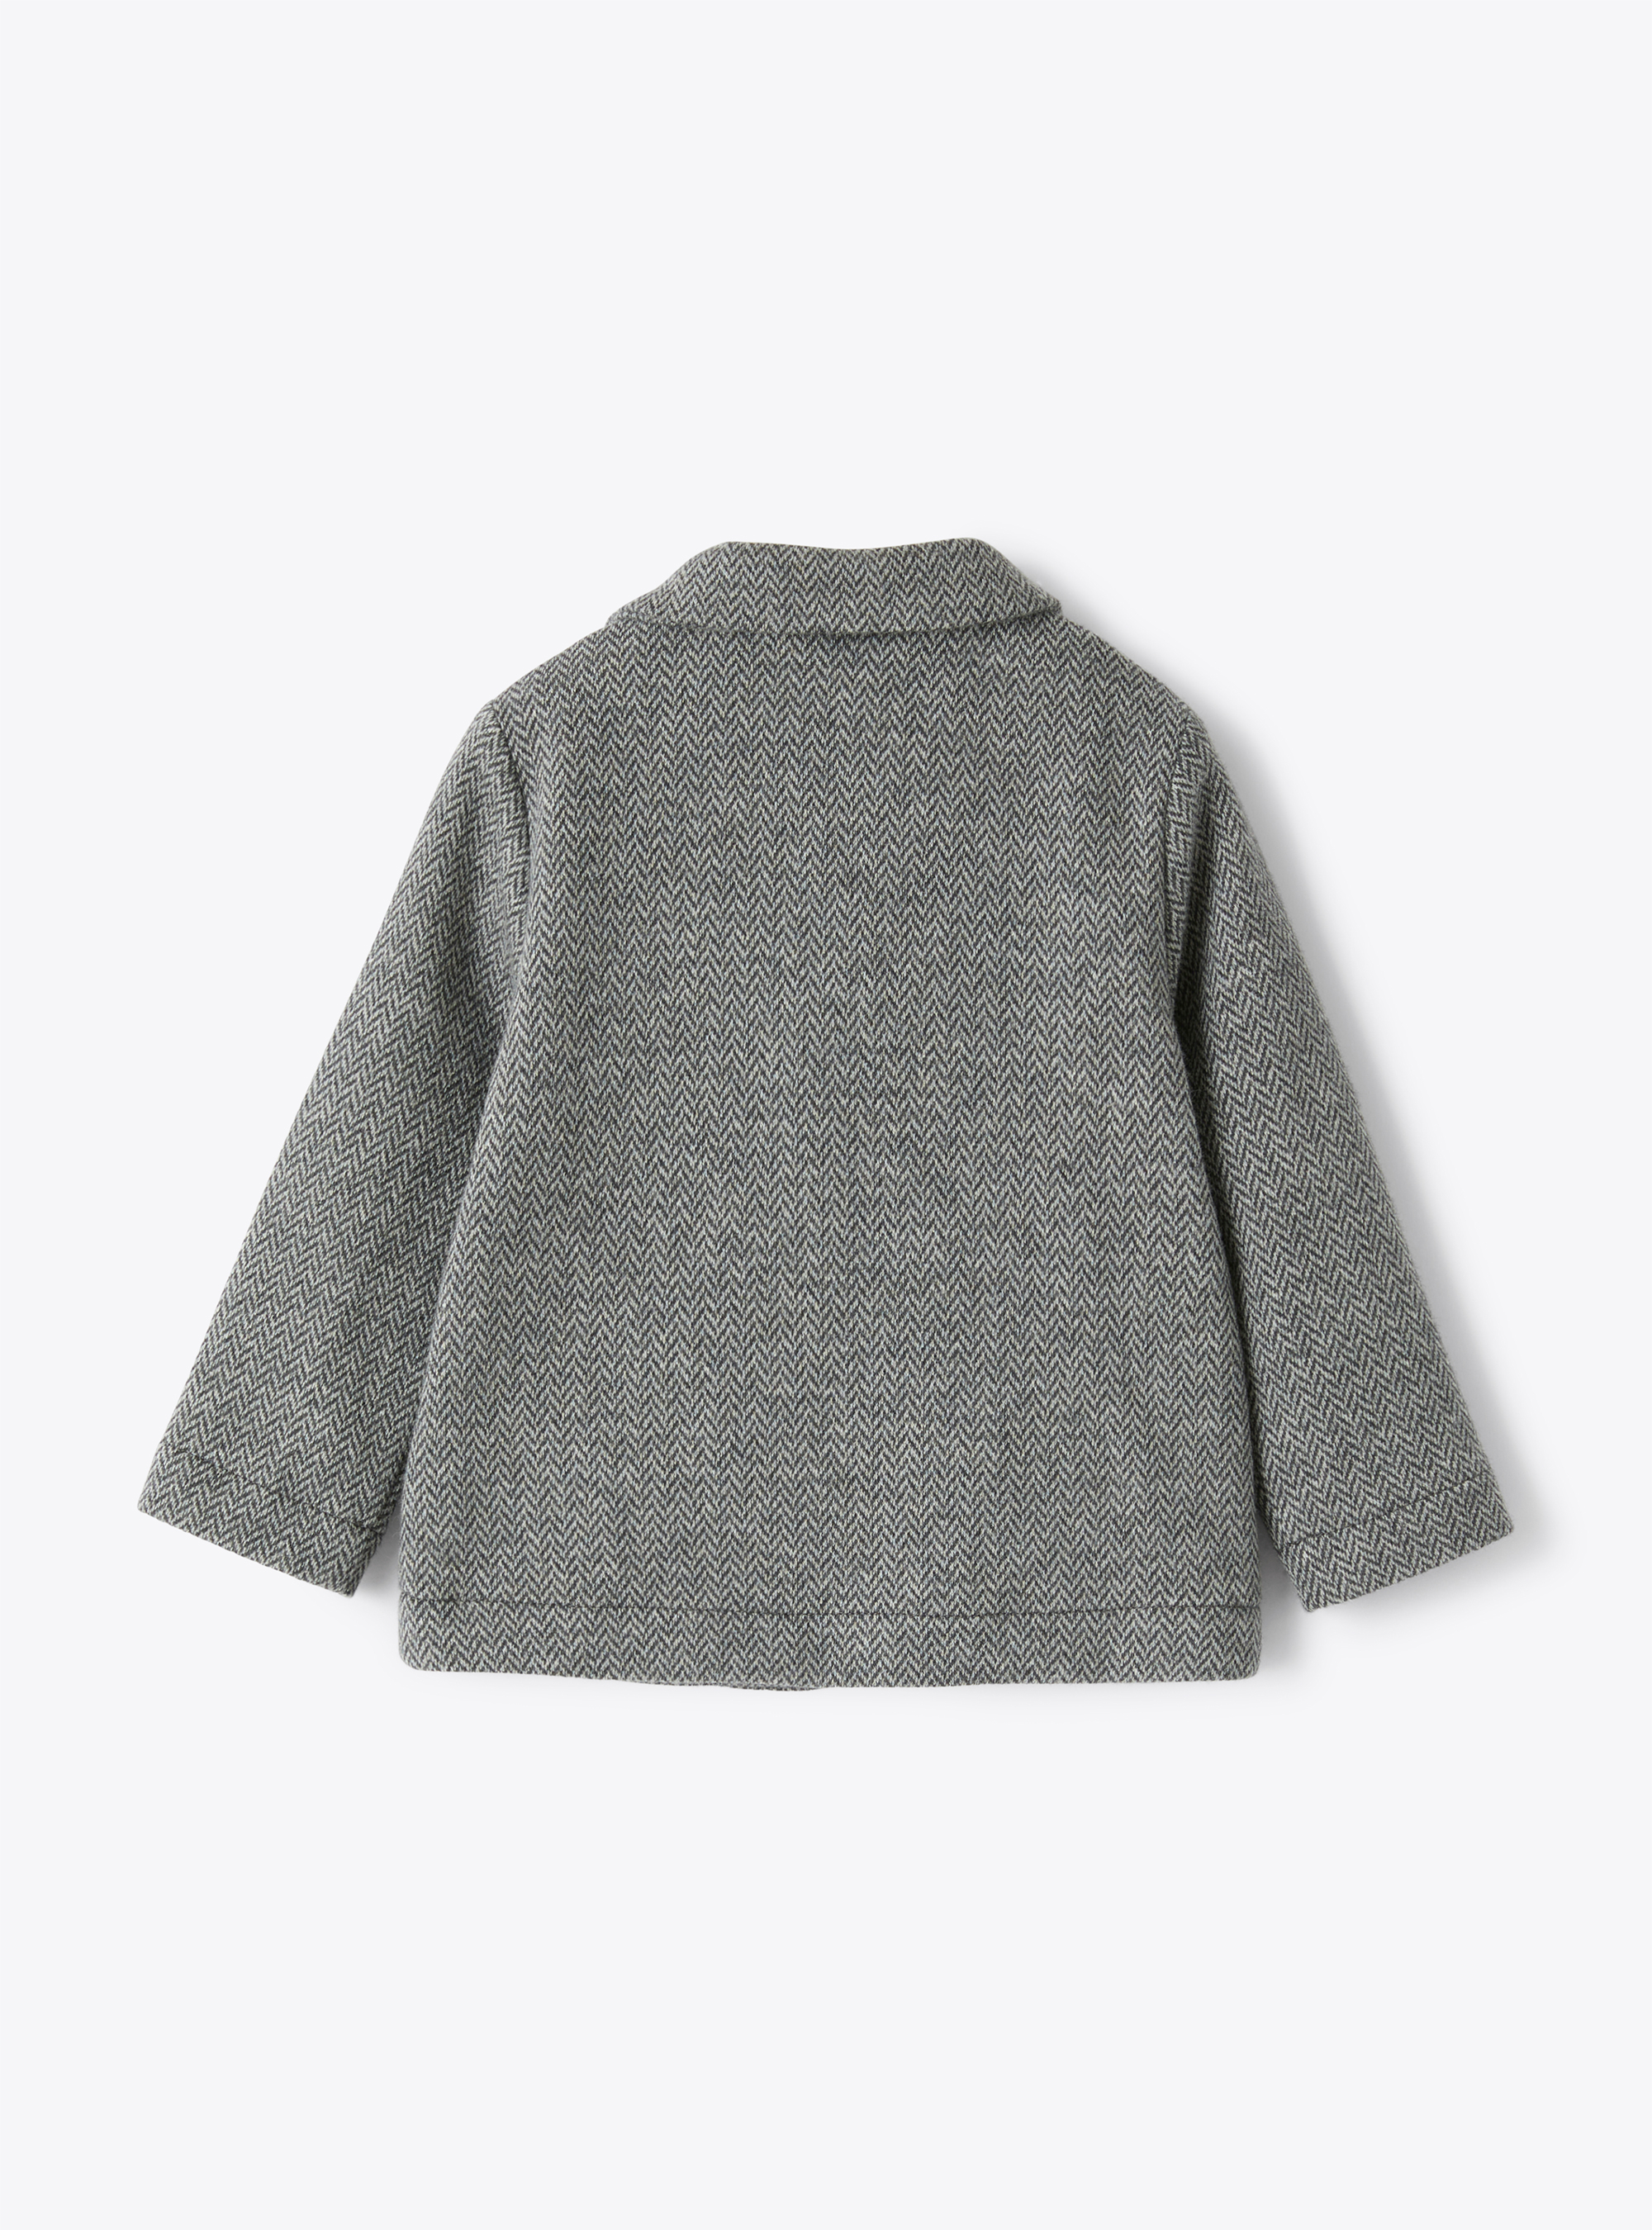 Blazer in grey herringbone-patterned cotton - Grey | Il Gufo